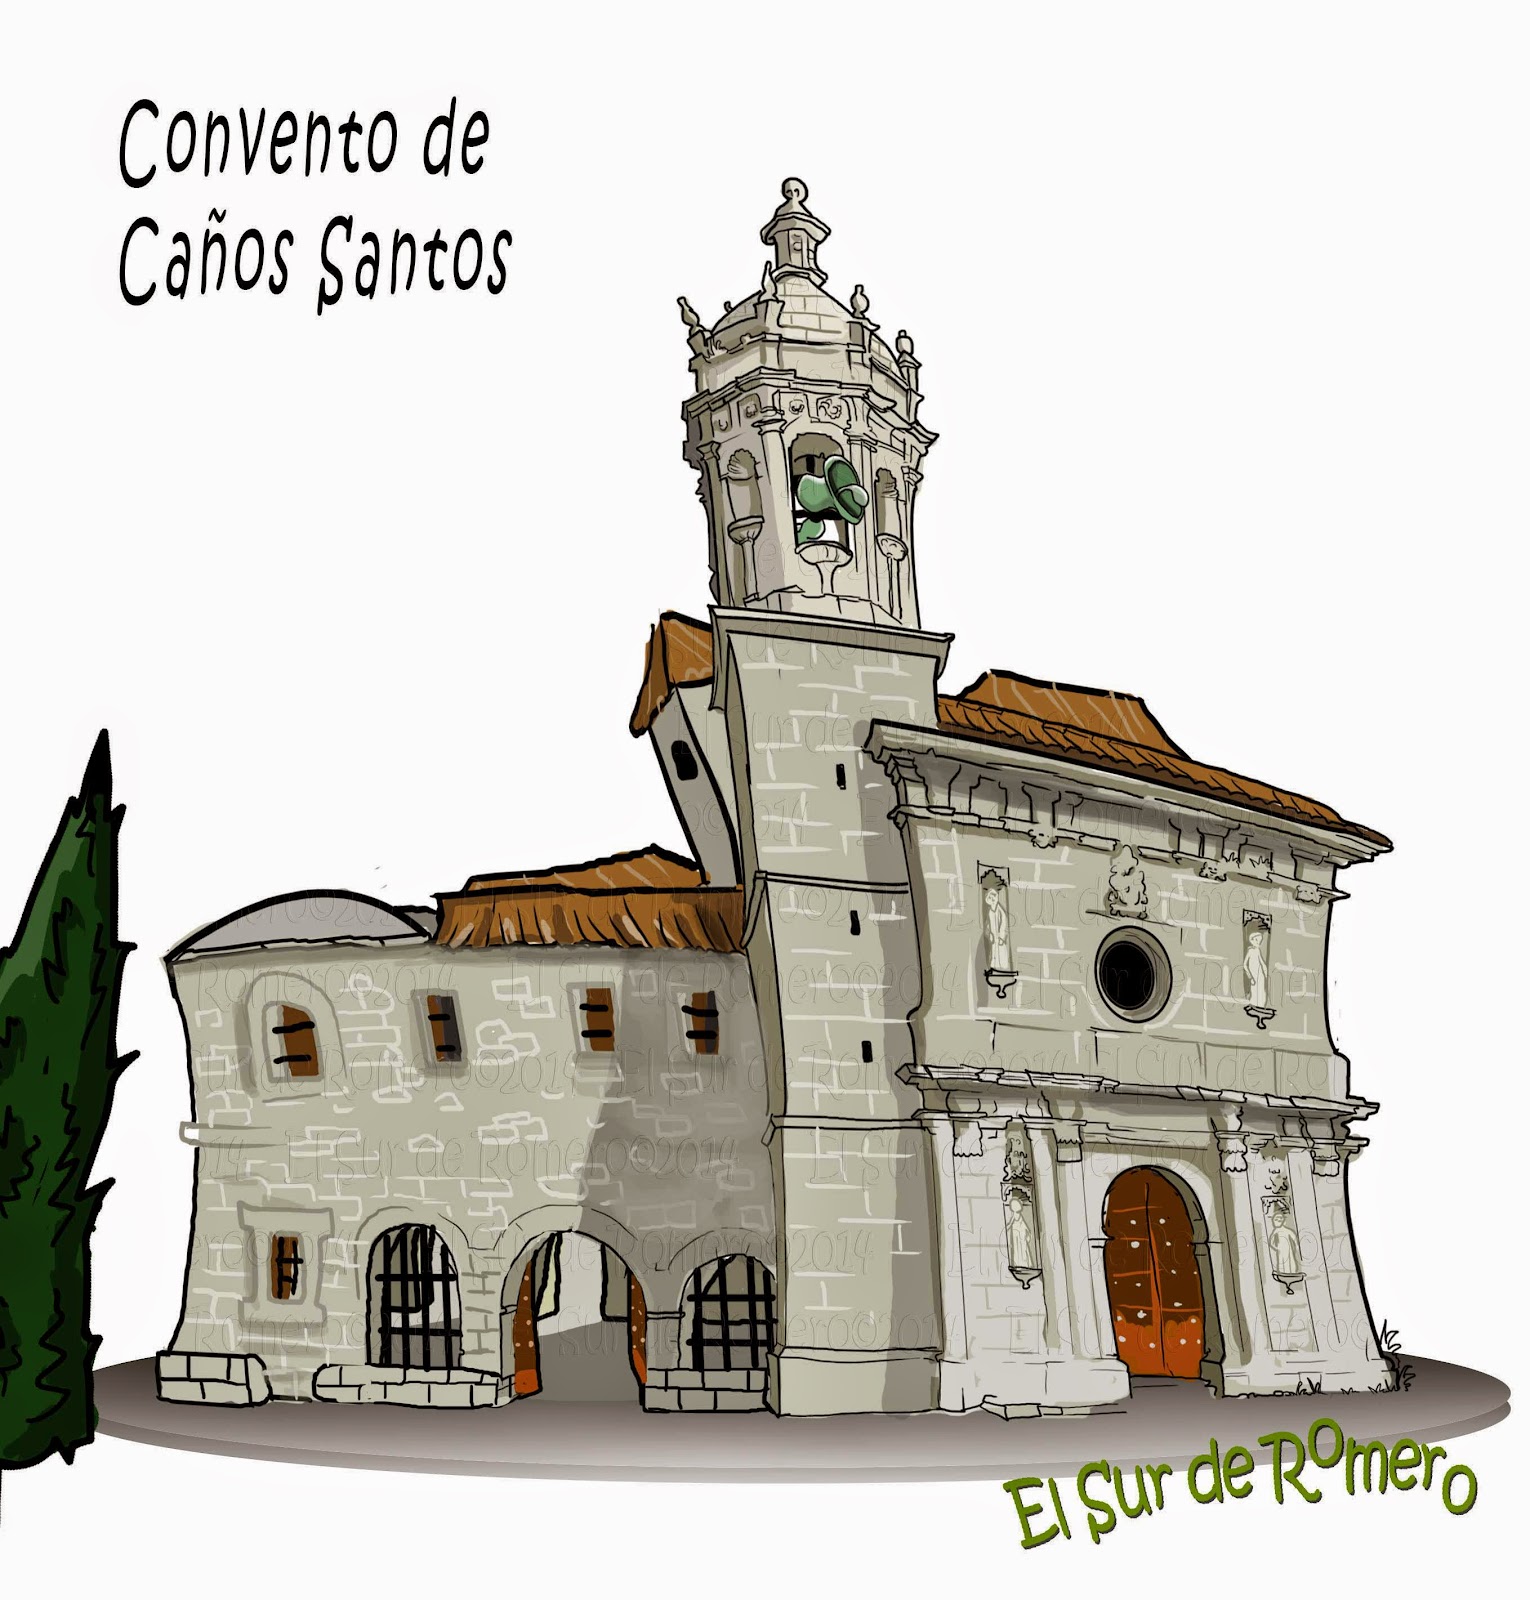 <img src="convento Caños Santos.jpg" alt="dibujos de monumentos"/>